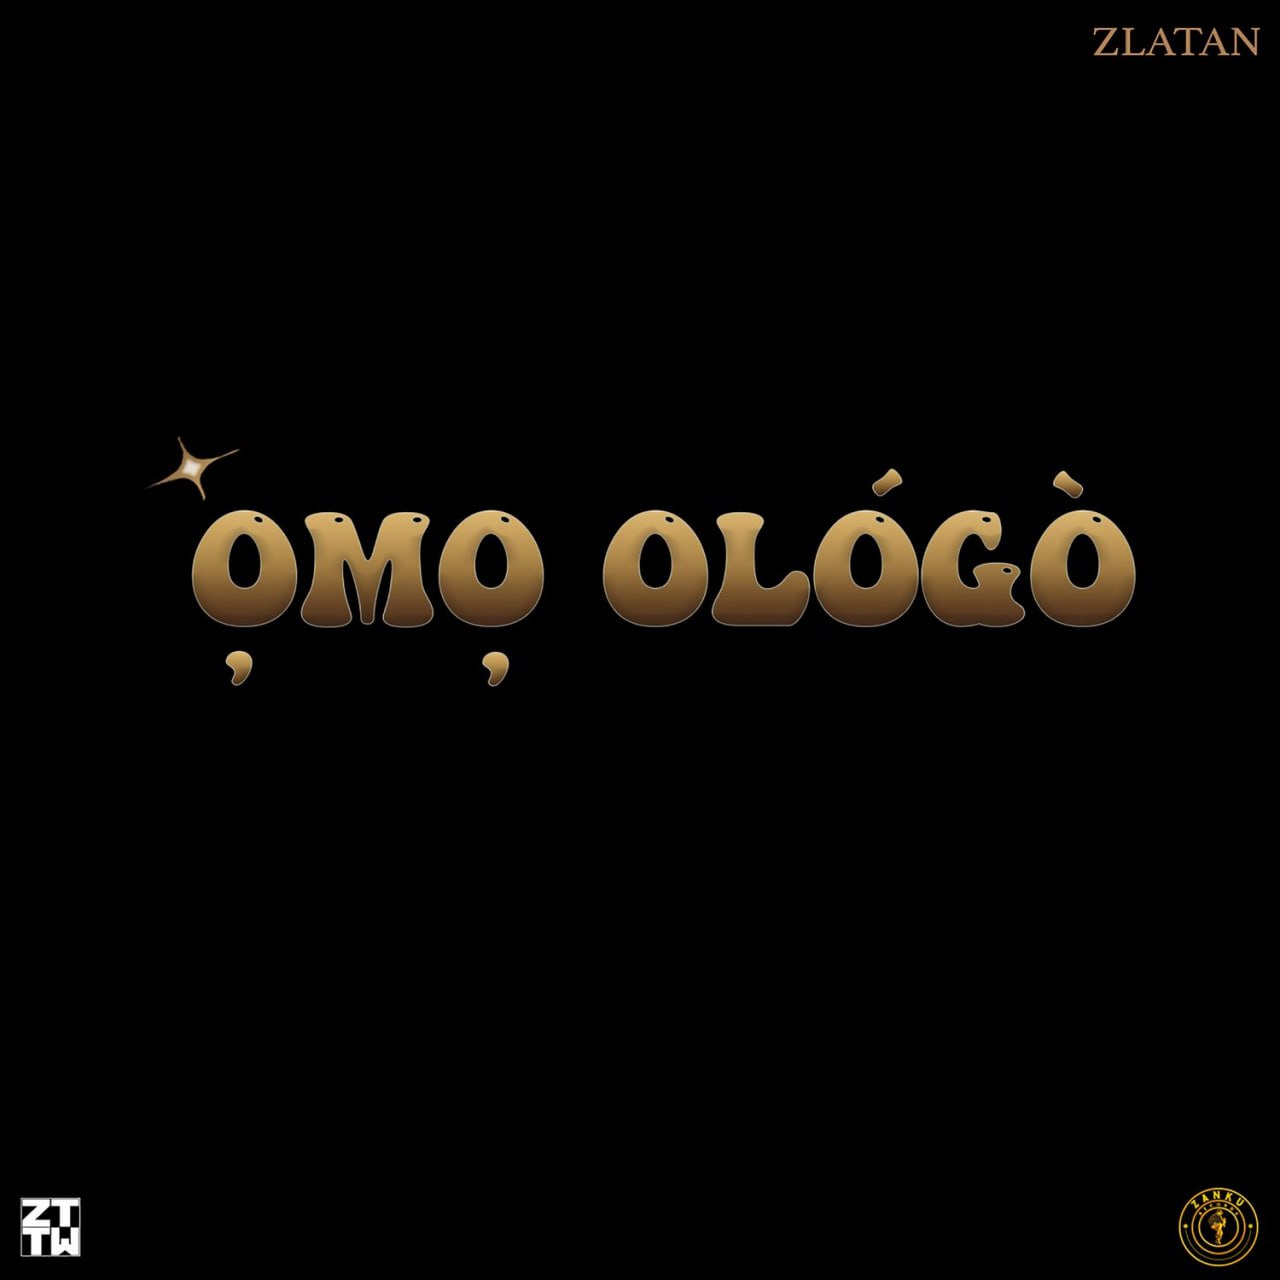 Omo Ologo - Zlatan